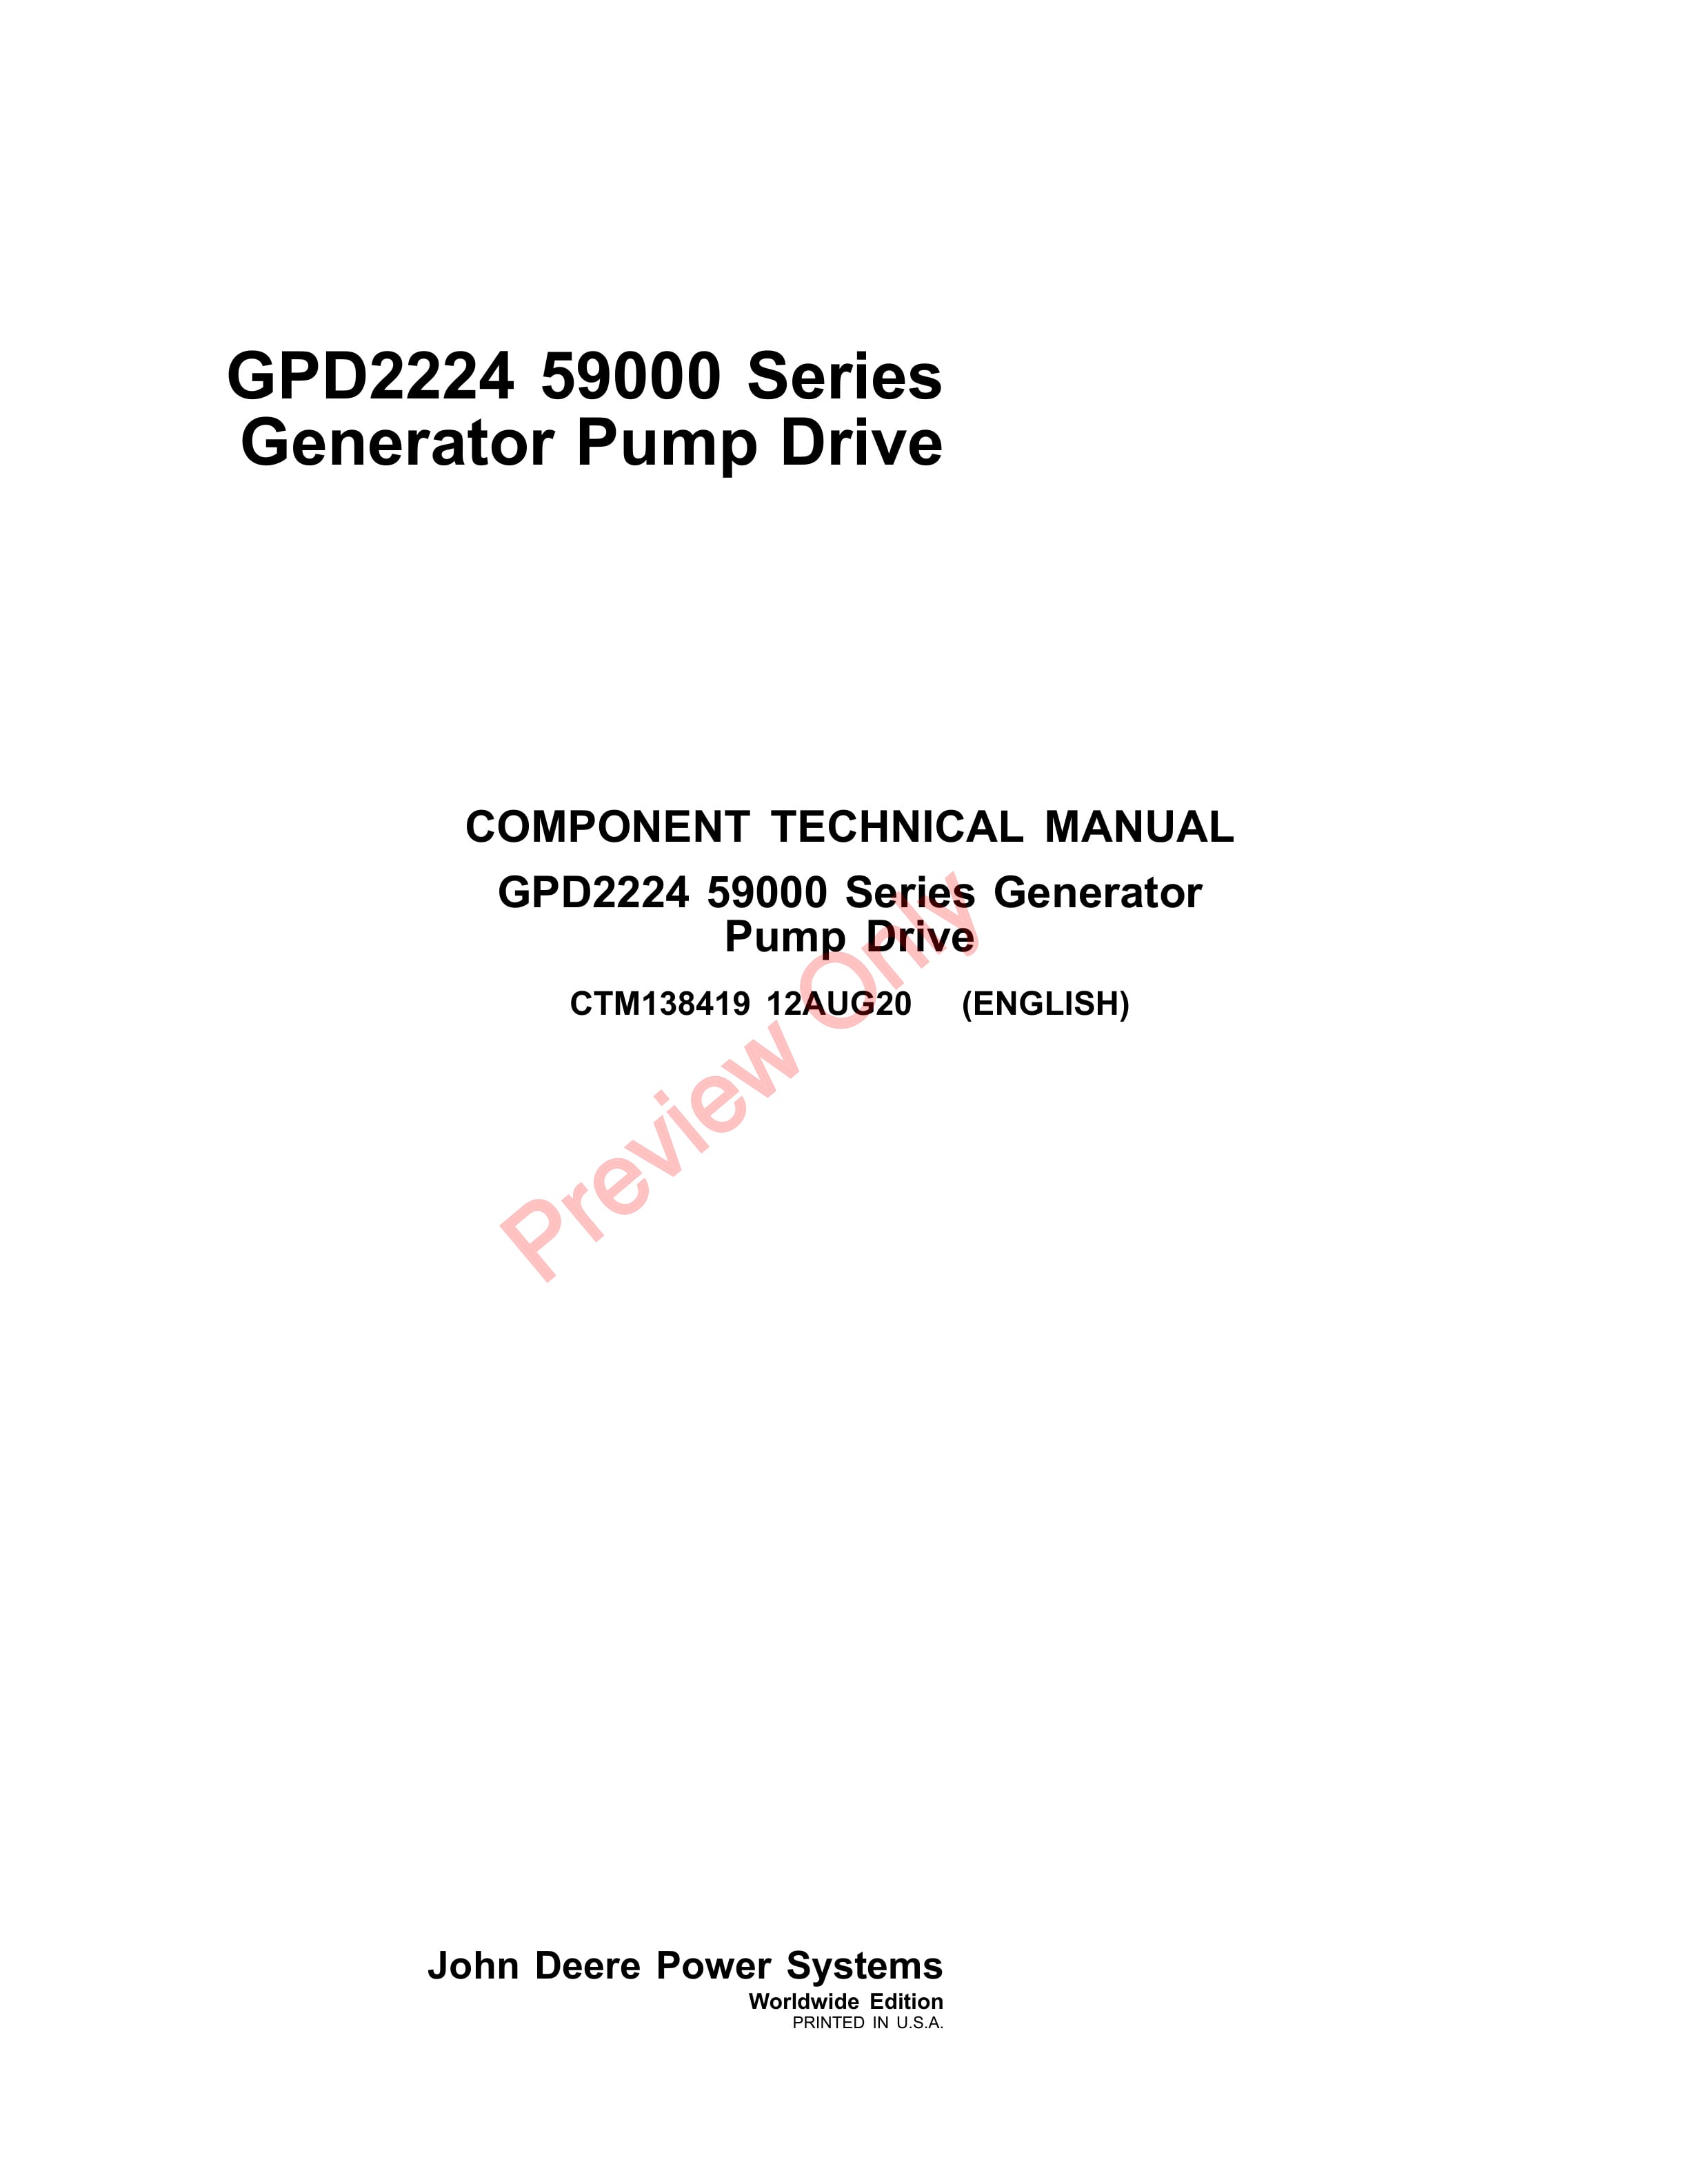 John Deere GPD2224 59000 Series Generator Pump Drive Component Technical Manual CTM138419 12AUG20-1